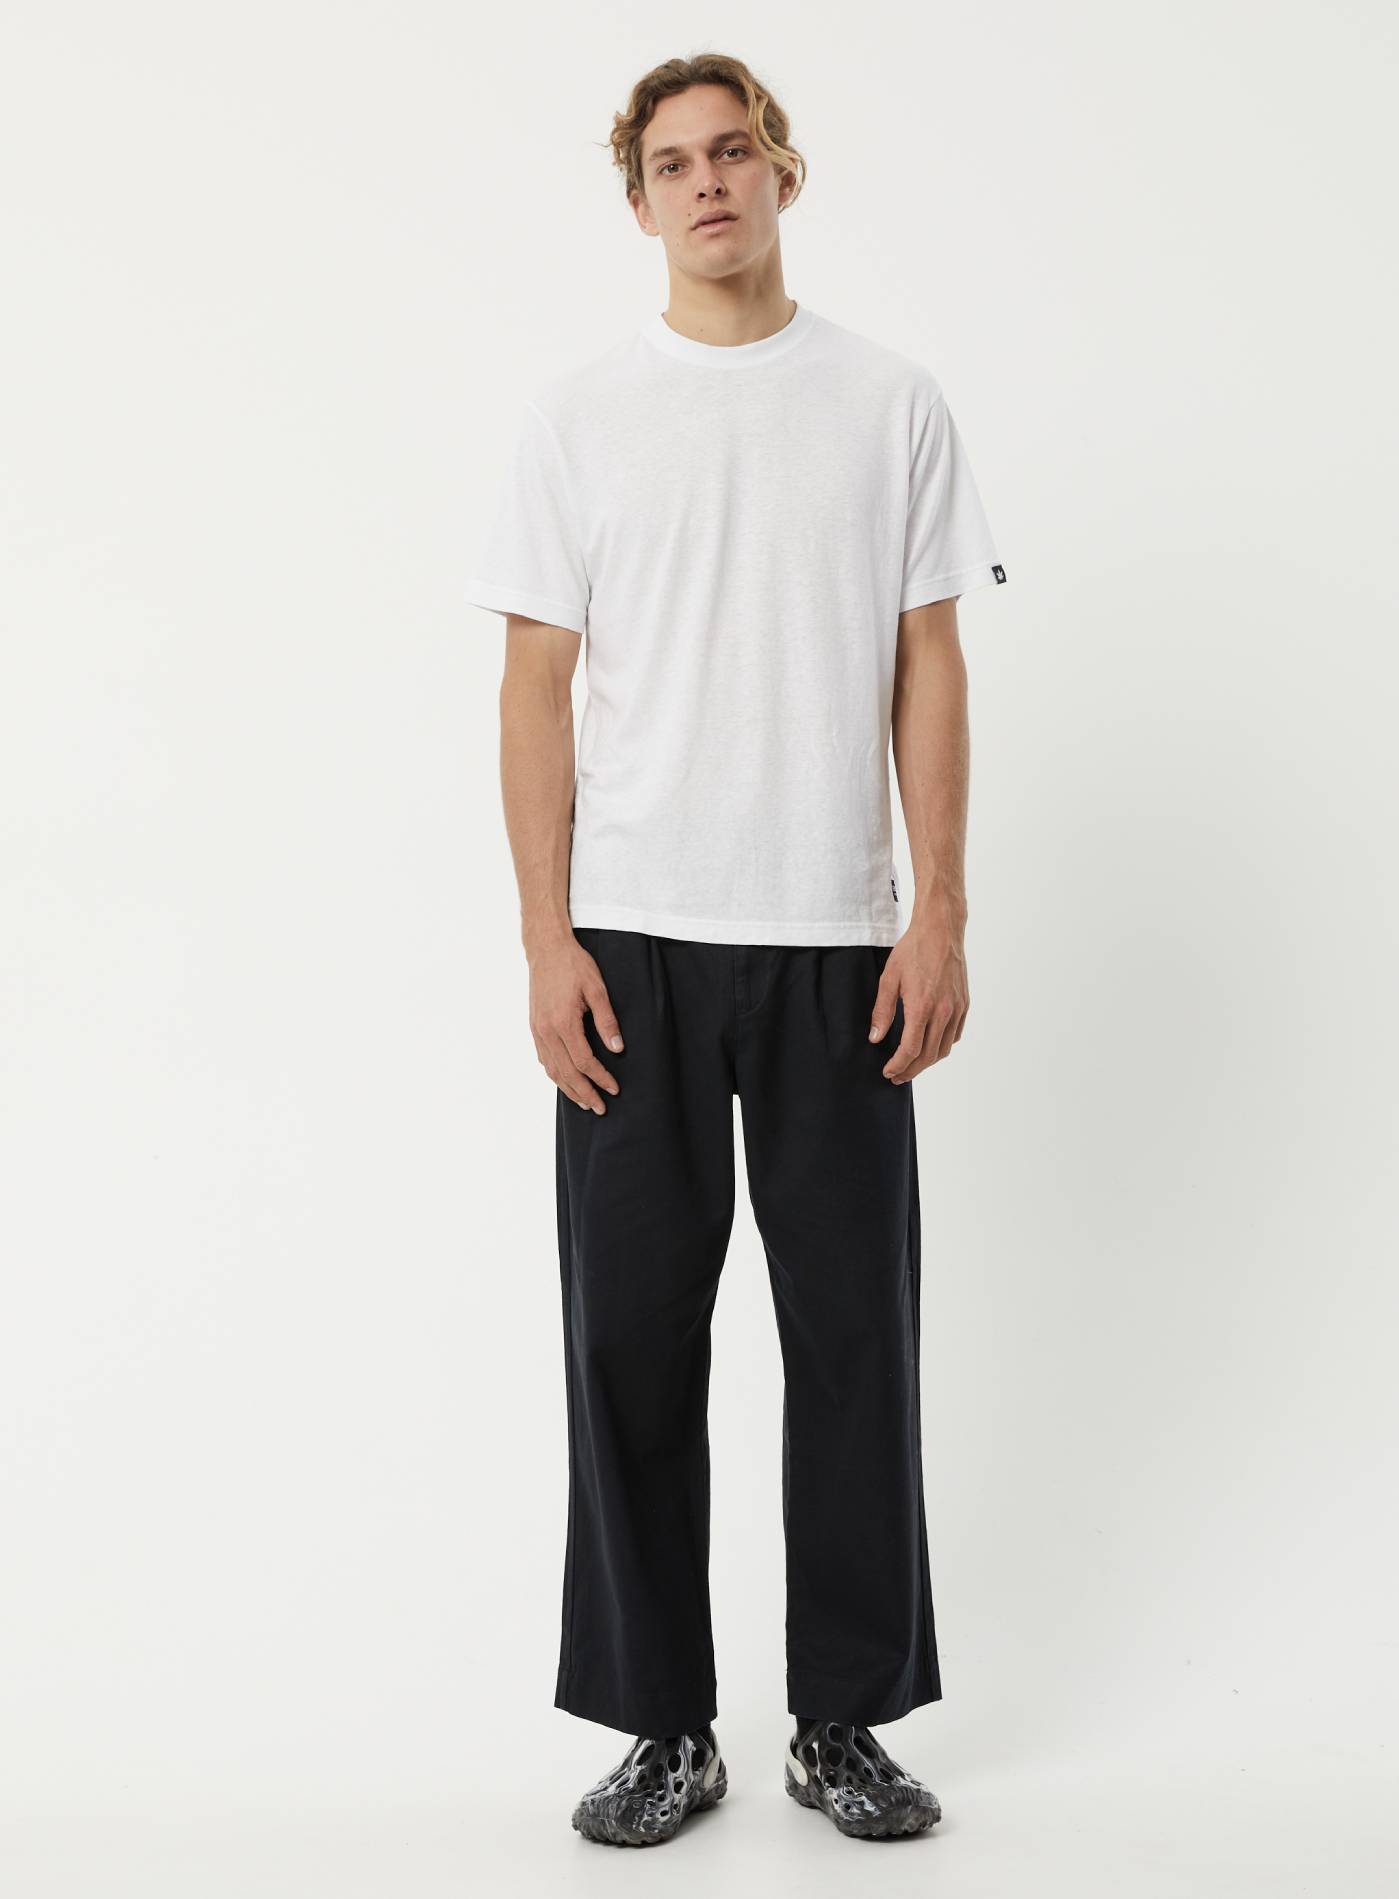 Men's Tan Suit, Black Crew-neck T-shirt, Black Velvet Loafers | Lookastic